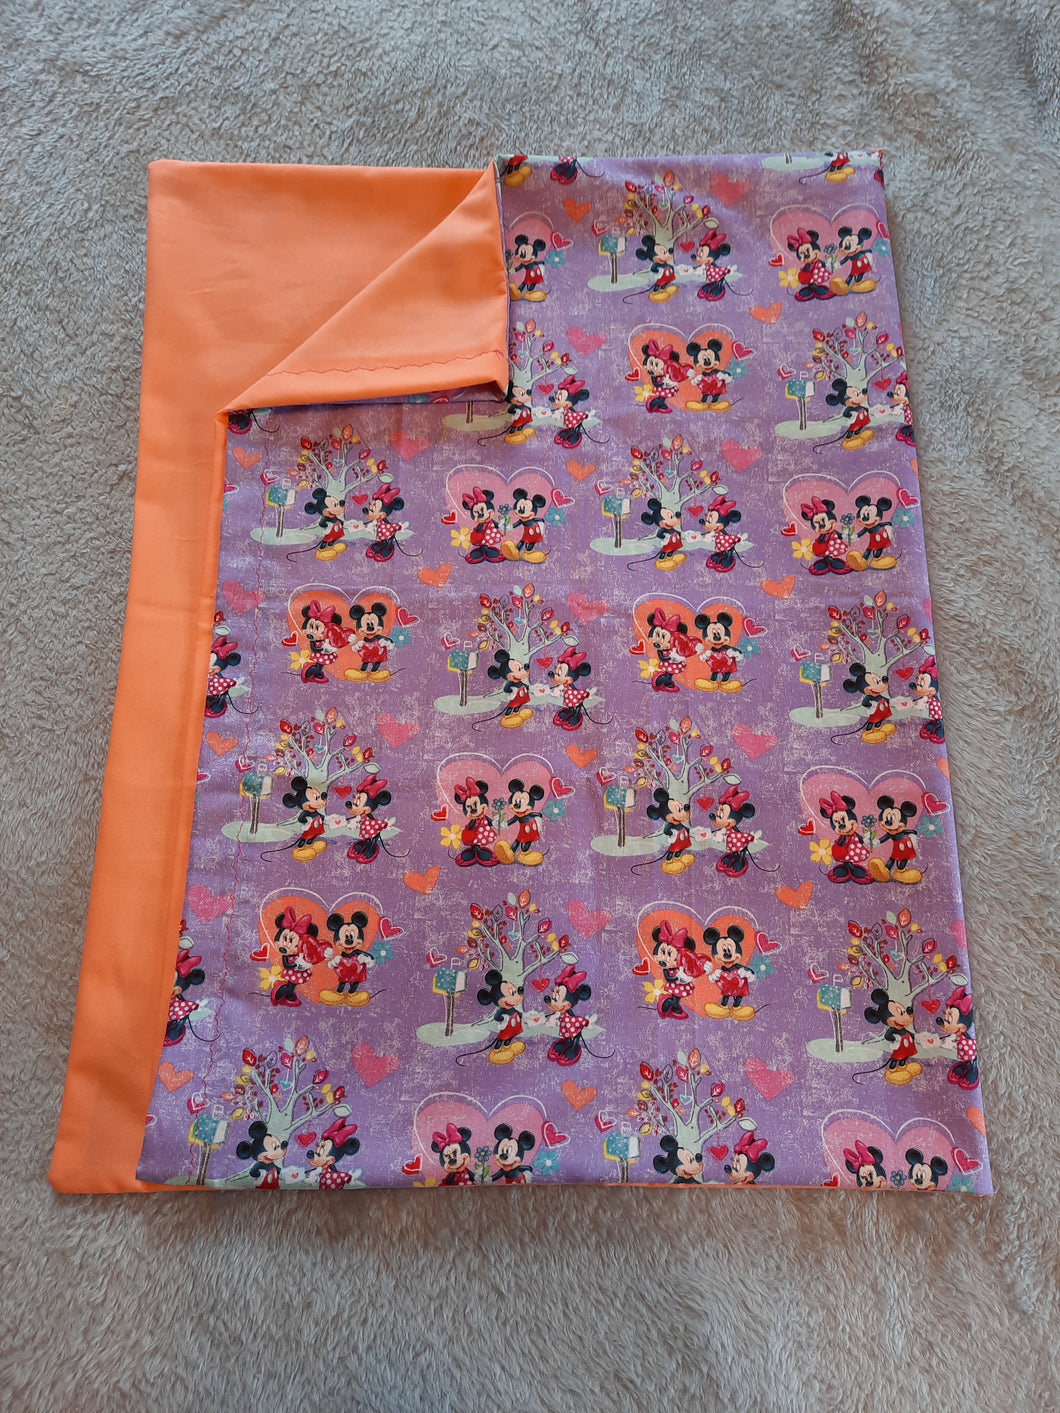 Licensed Pillowcase - Disney's Mickey & Minnie 